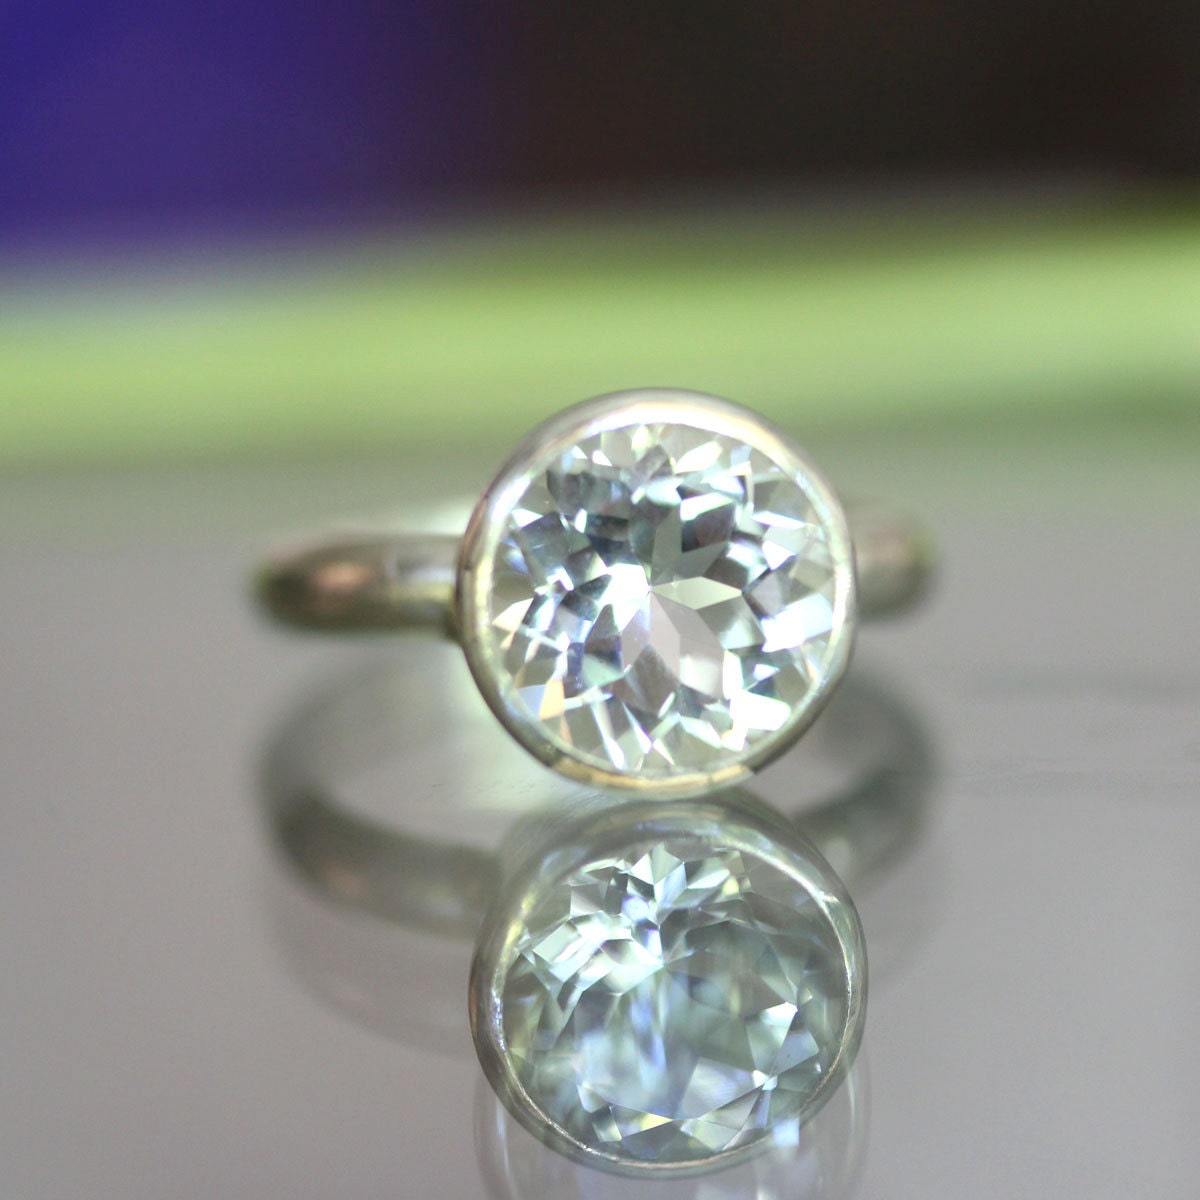 White Topaz Sterling Silver Ring Gemstone Ring in No Nickel | Etsy